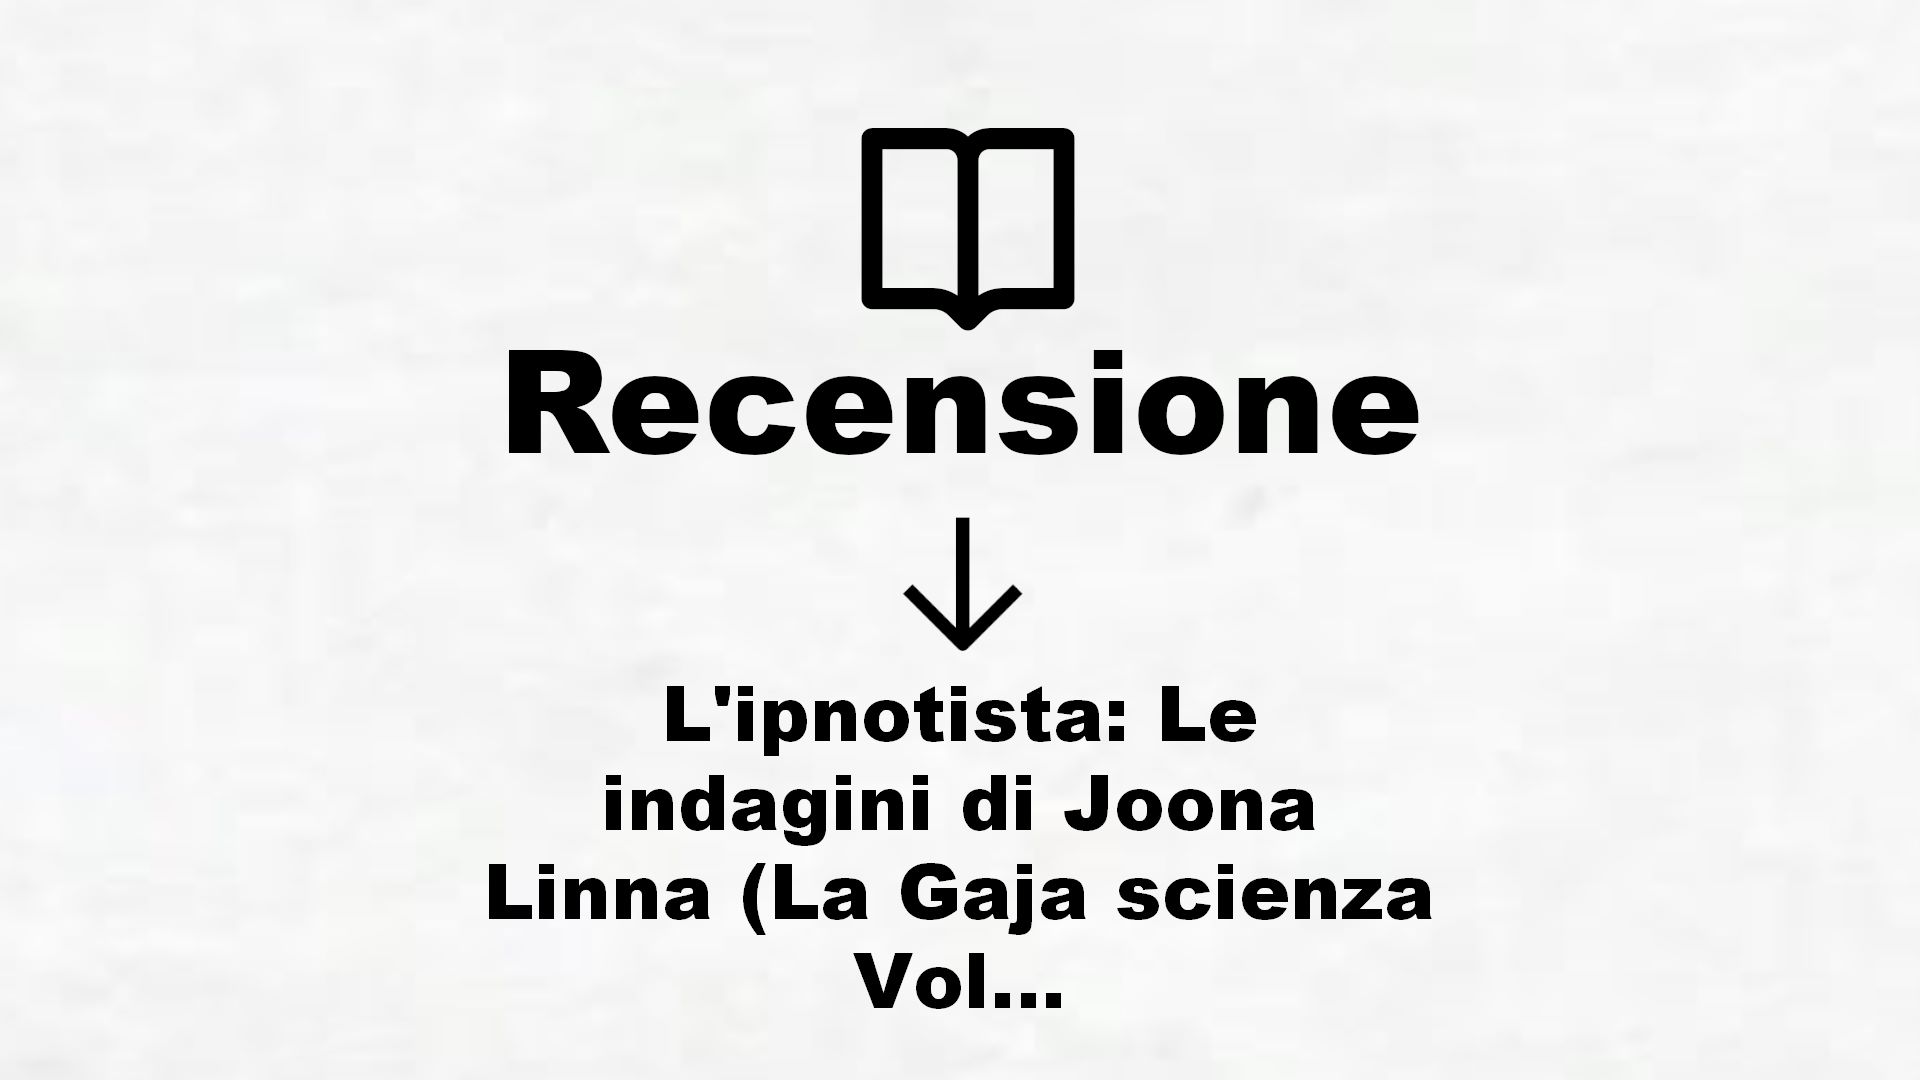 L’ipnotista: Le indagini di Joona Linna (La Gaja scienza Vol. 944) – Recensione Libro